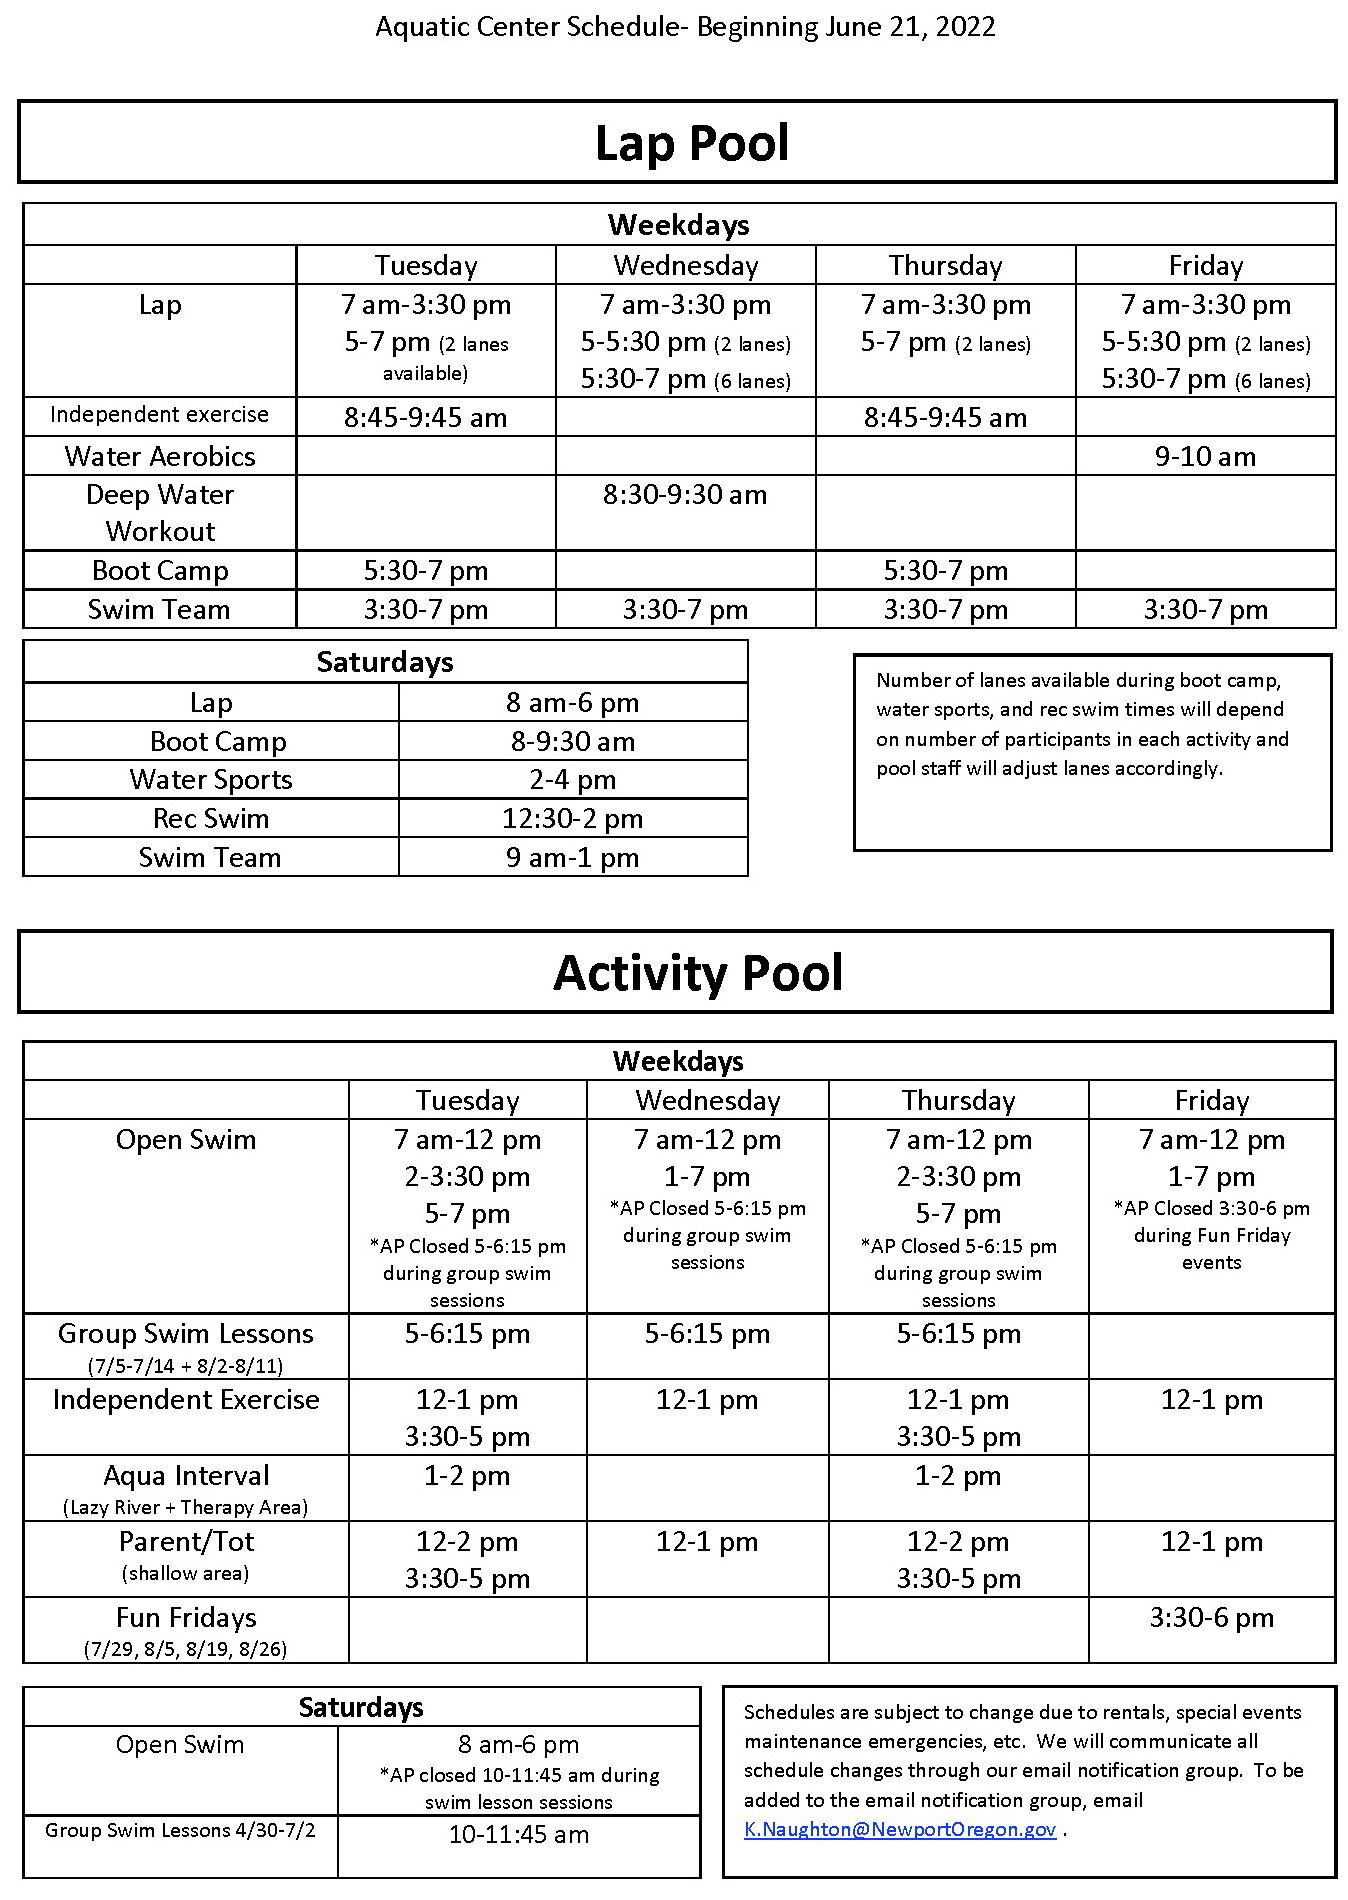 pool schedule